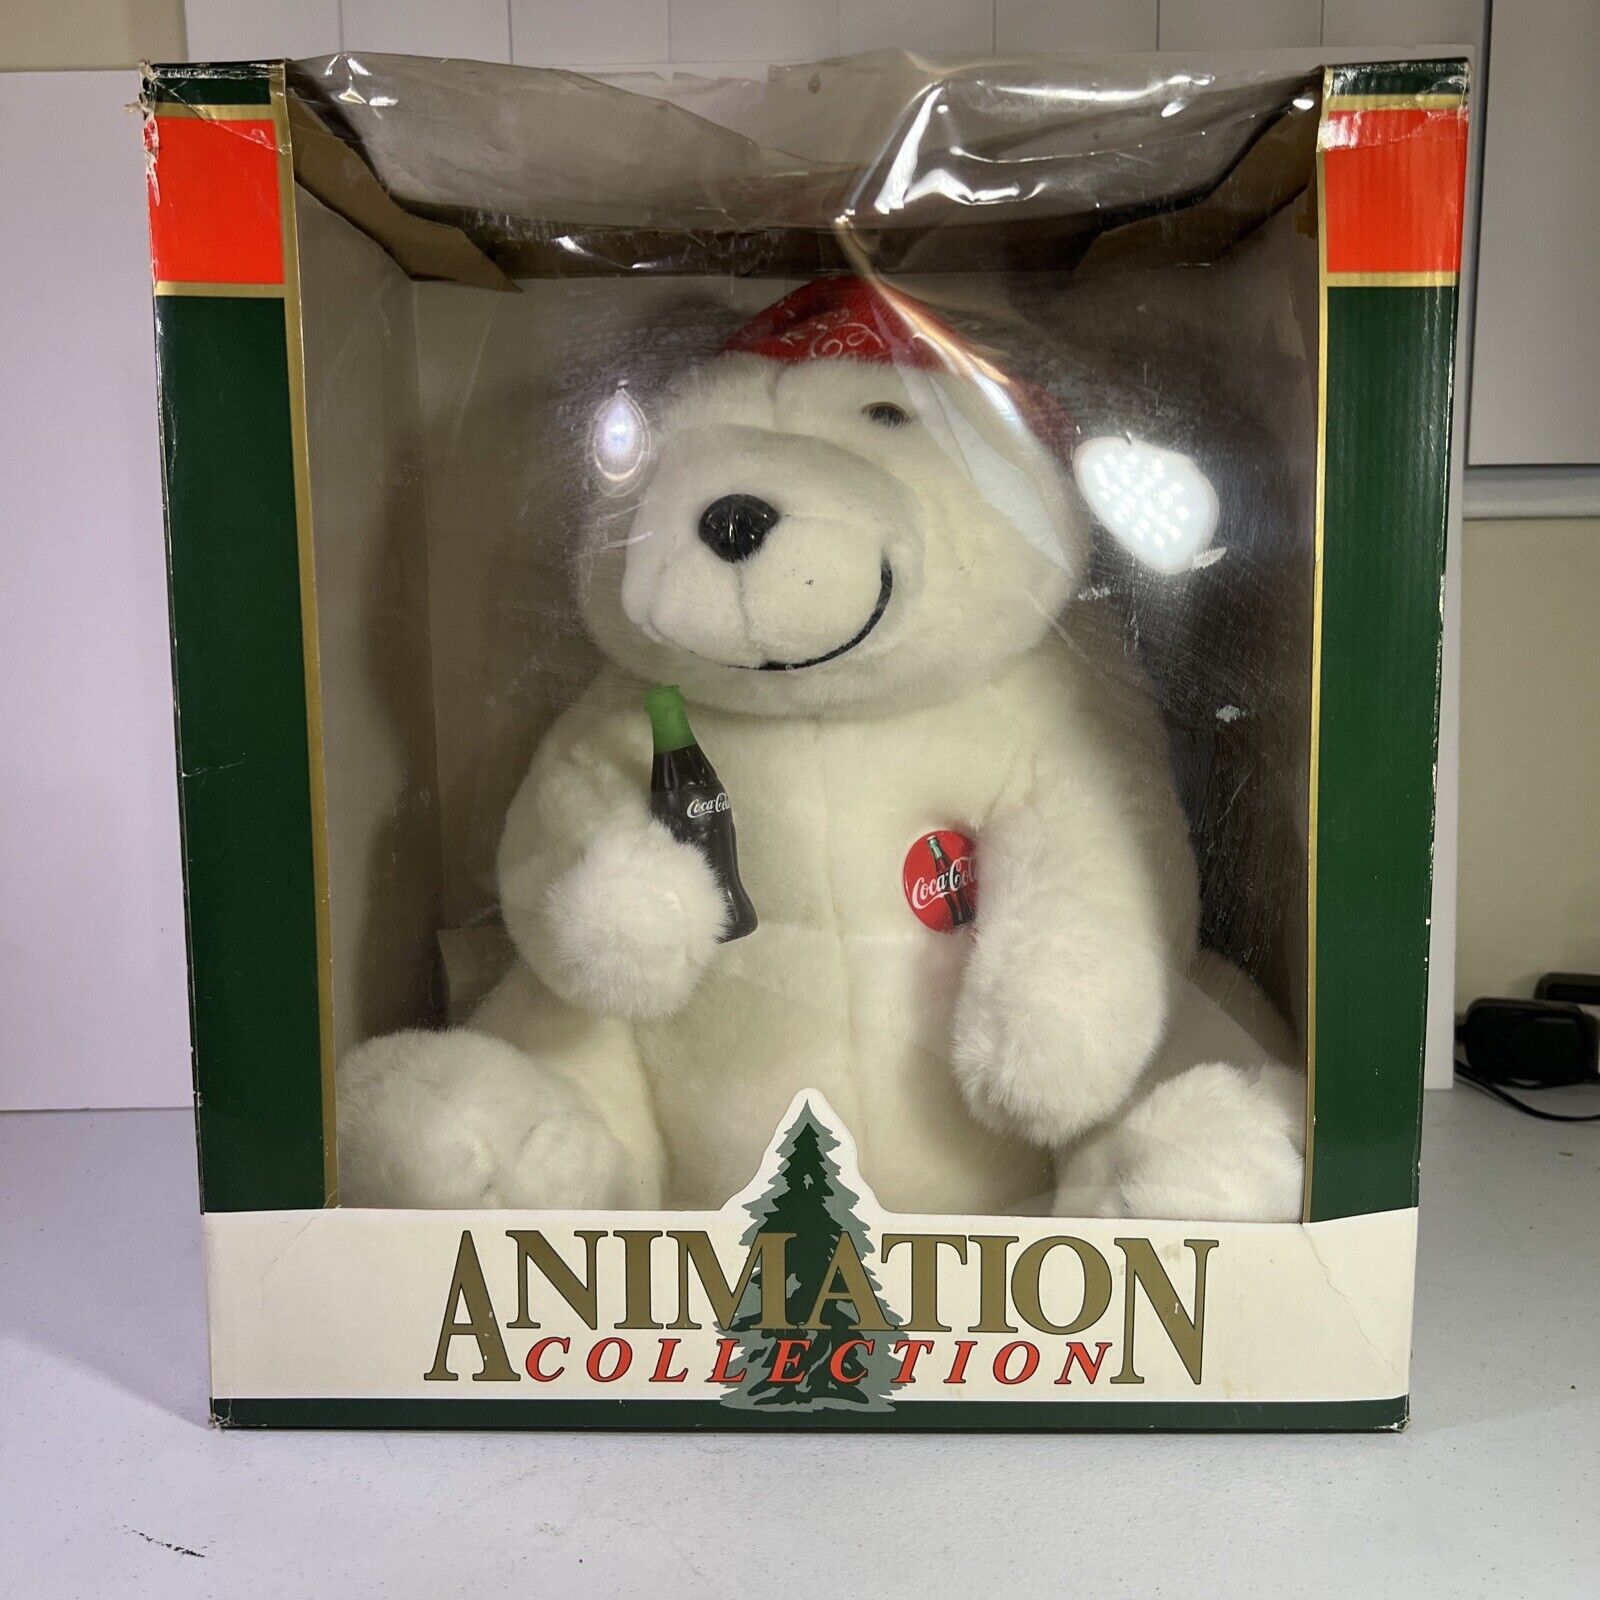 Always Coca Cola Polar Bear  plush Animation 1995 15\